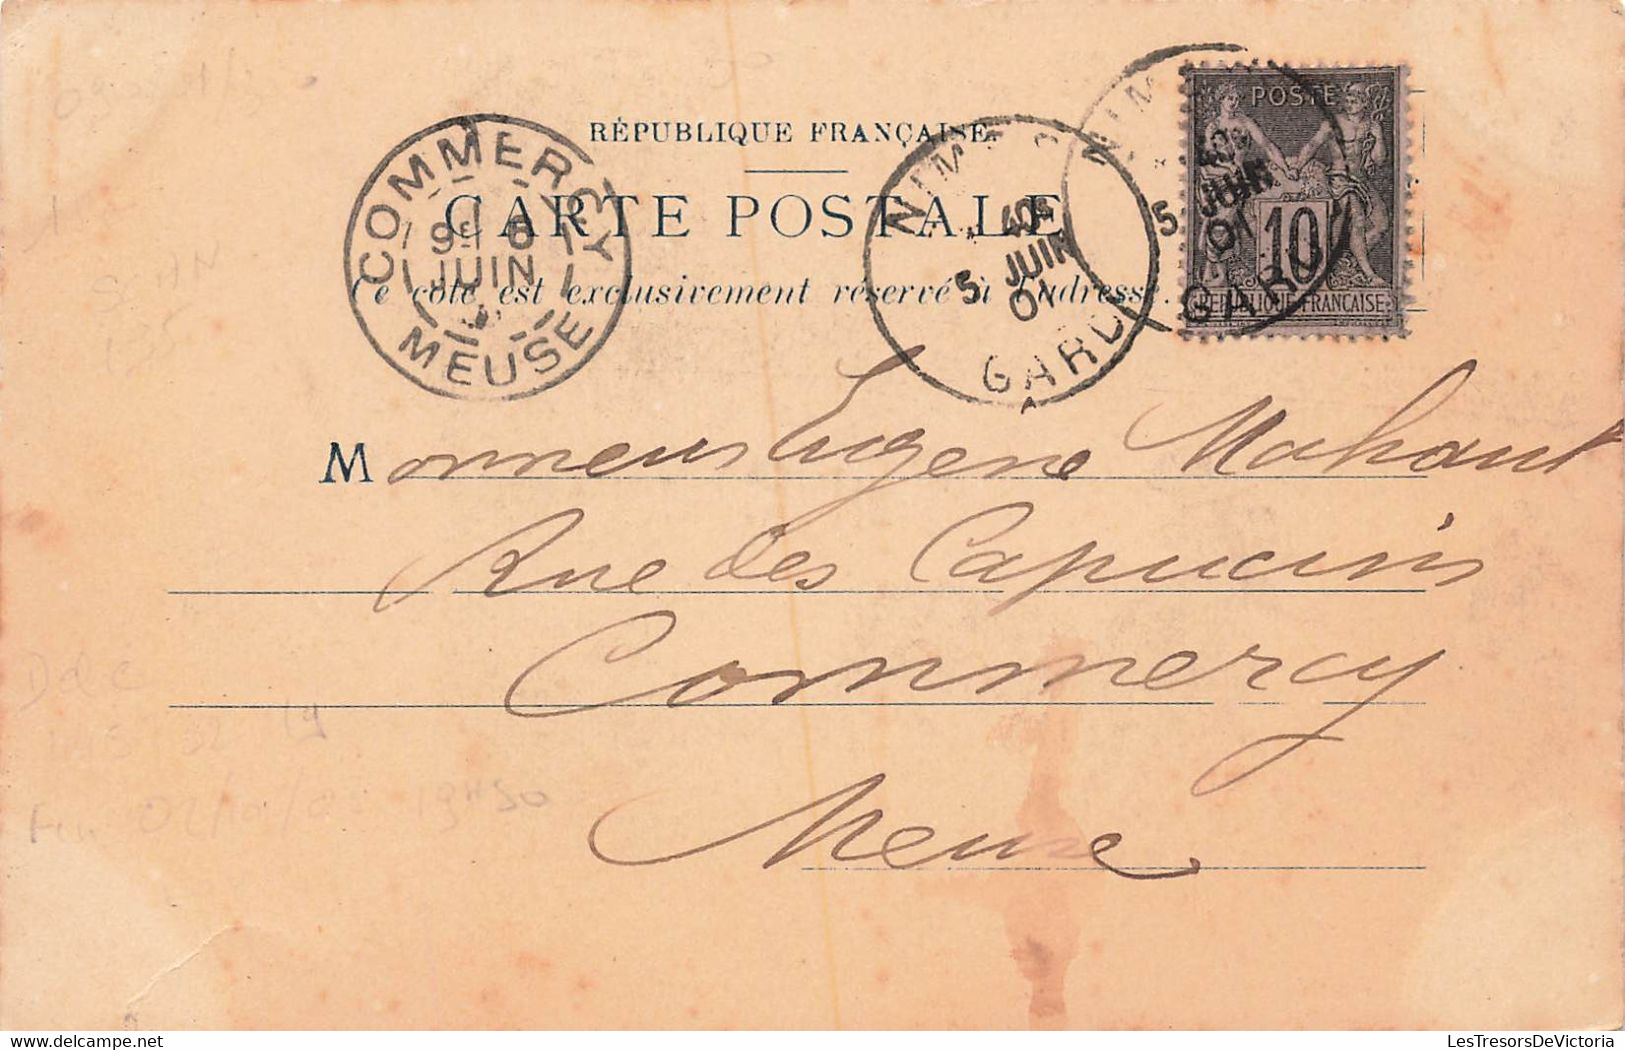 CPA CORRIDA - Courses De Taureaux - Une Pique - Charles Bernheim - 1901 - Carte Precurseur - Corridas